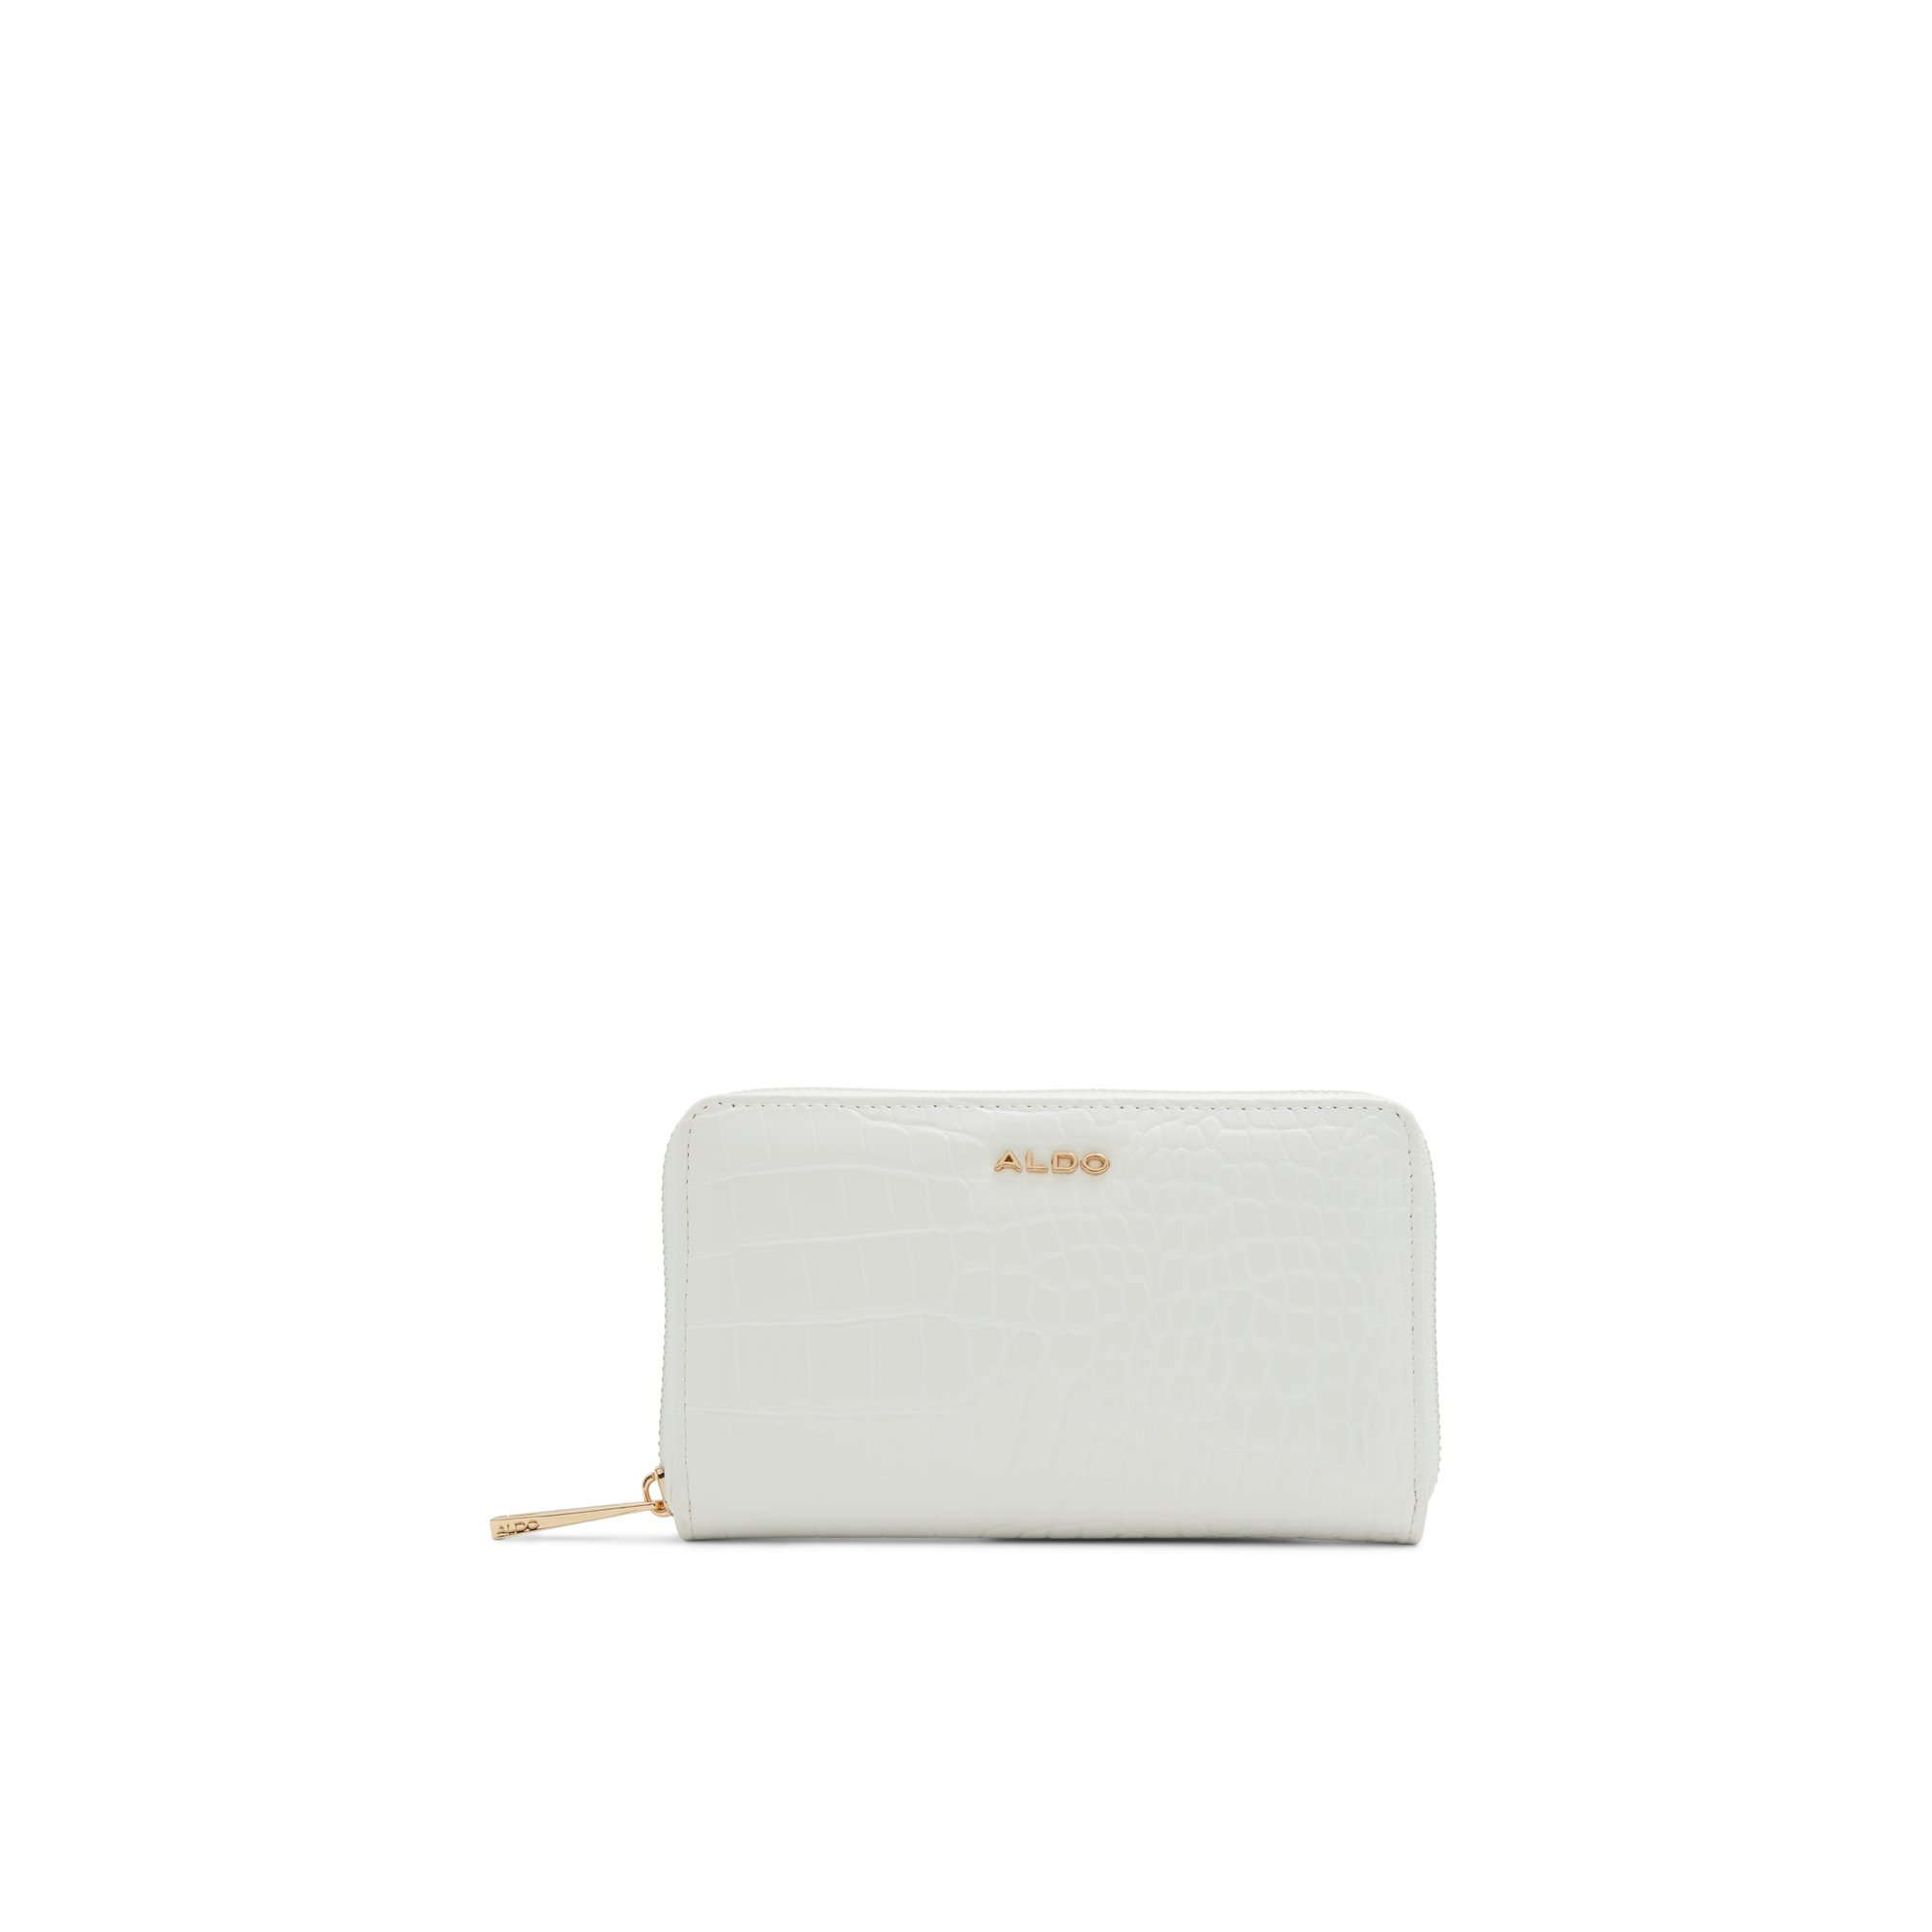 ALDO Kedoe - Women's Handbags Wallets - White